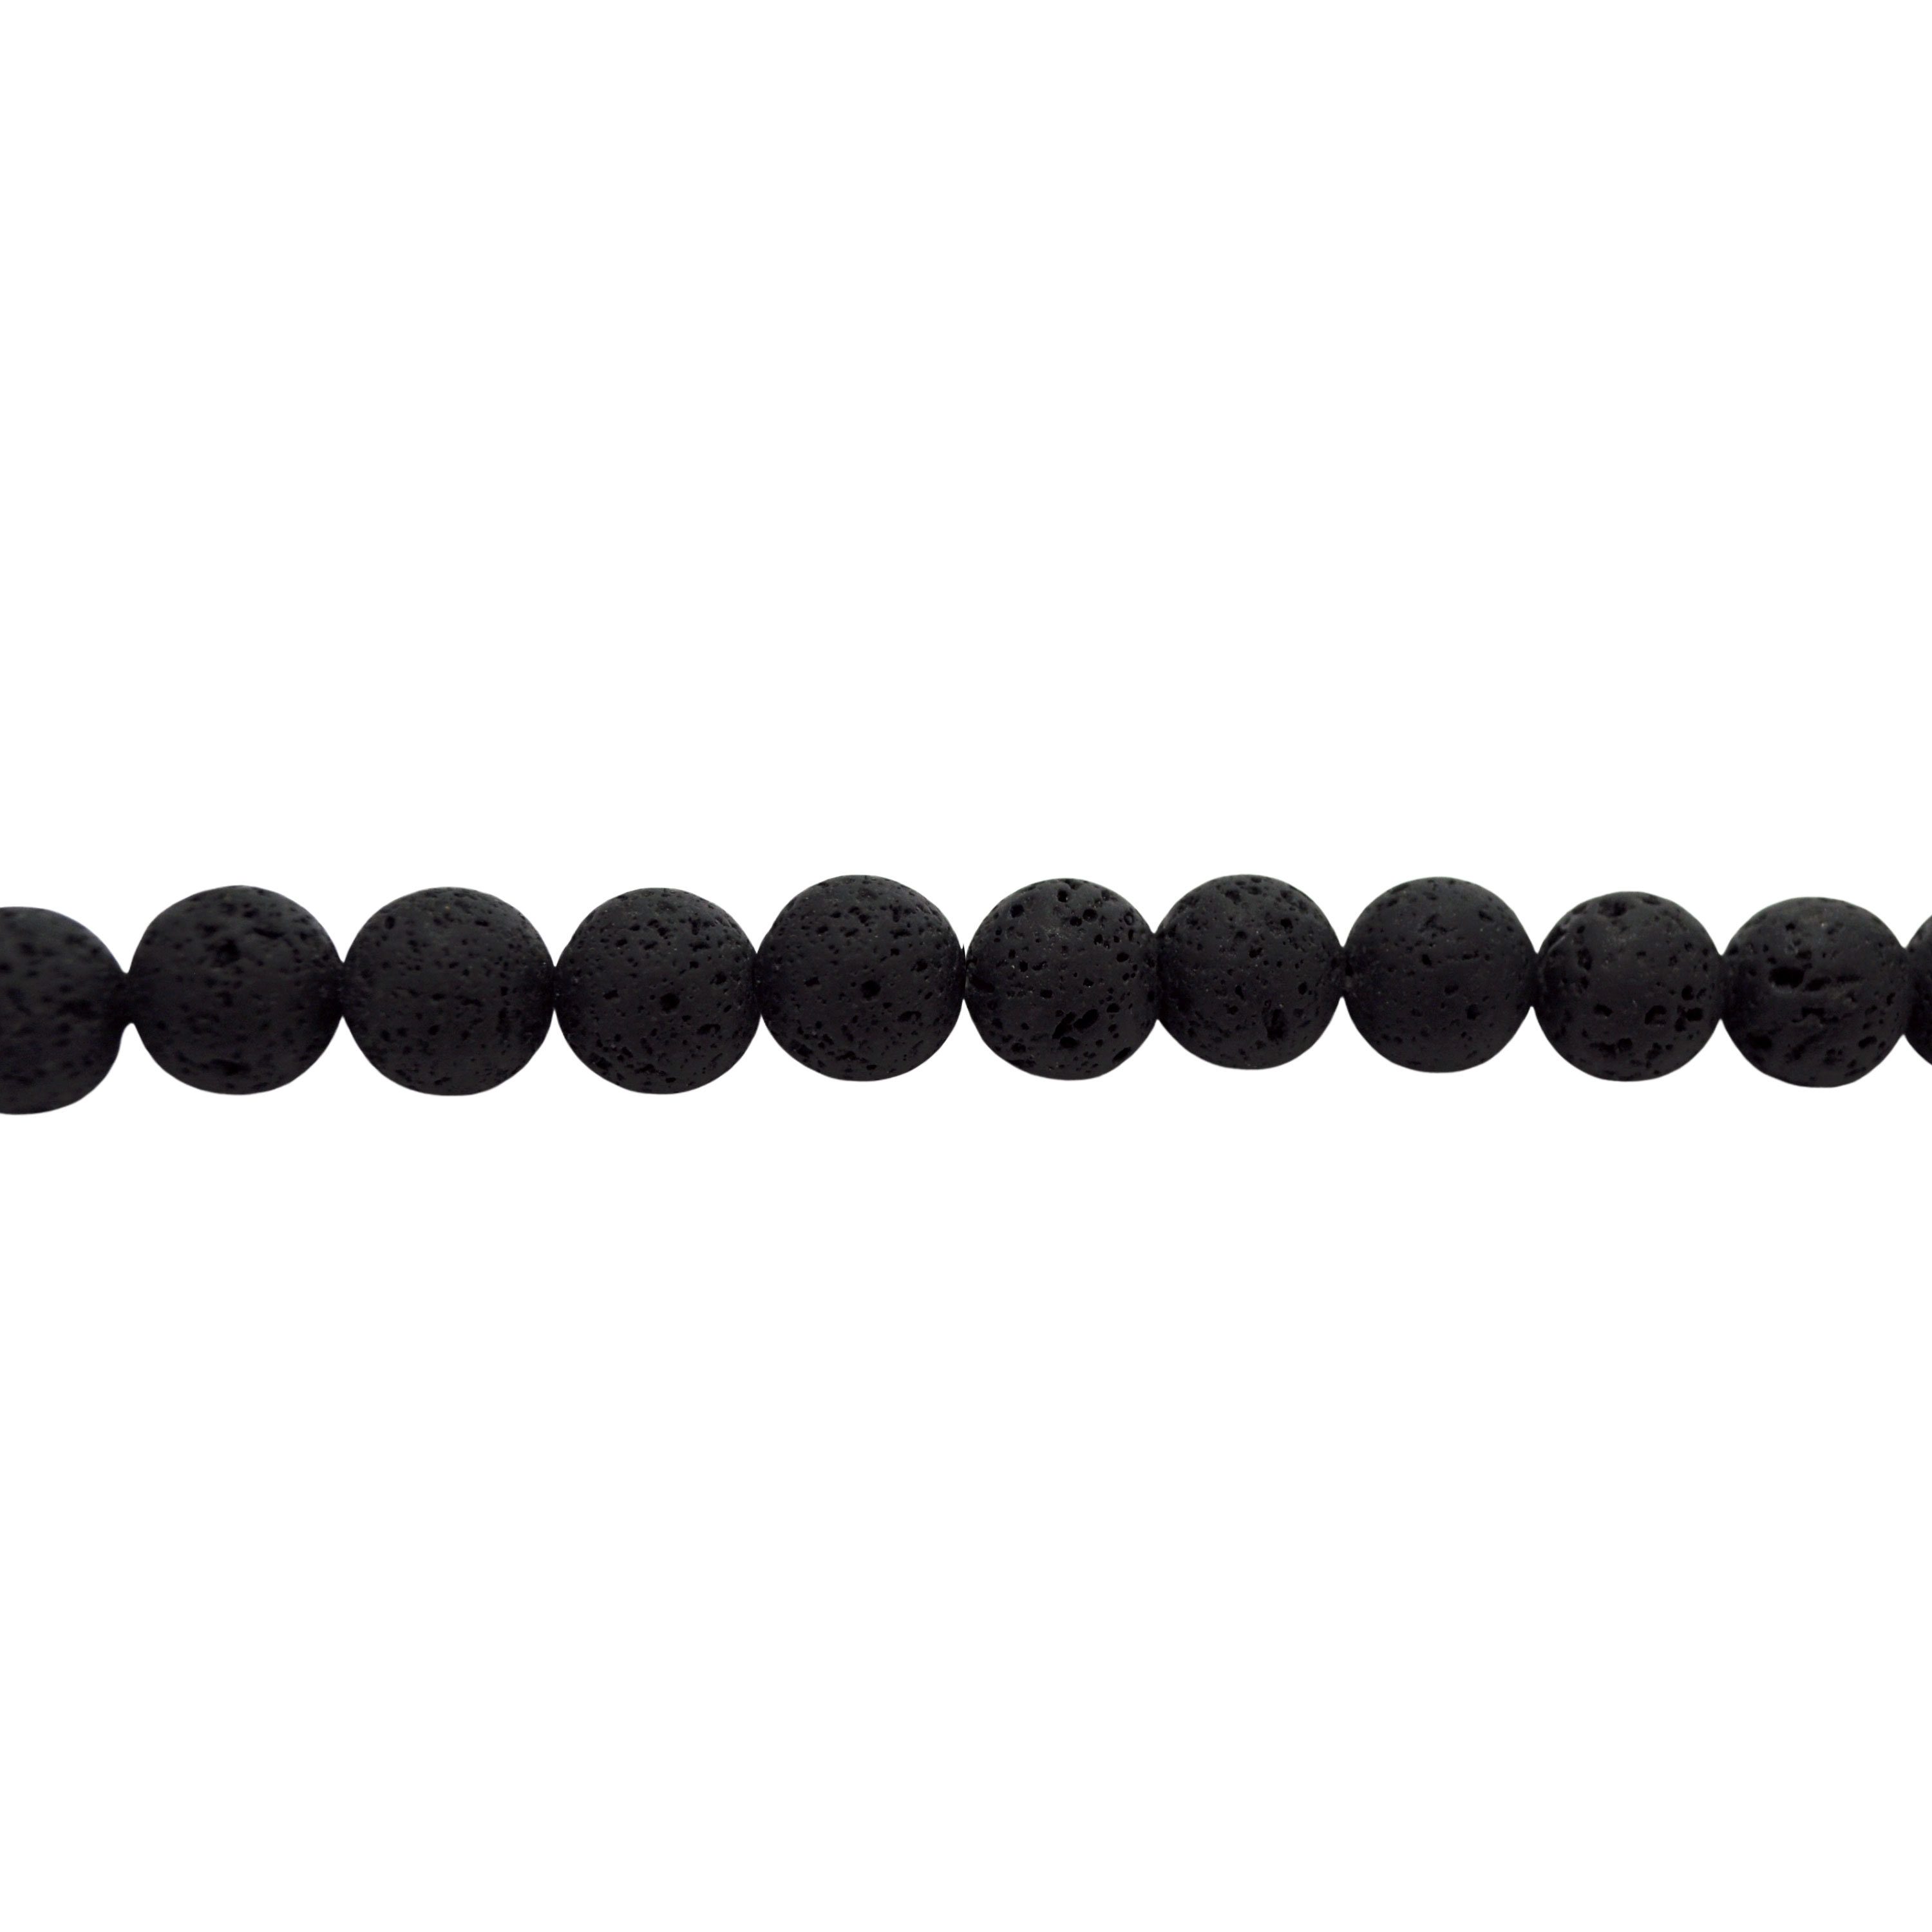 12mm Black Lava Beads